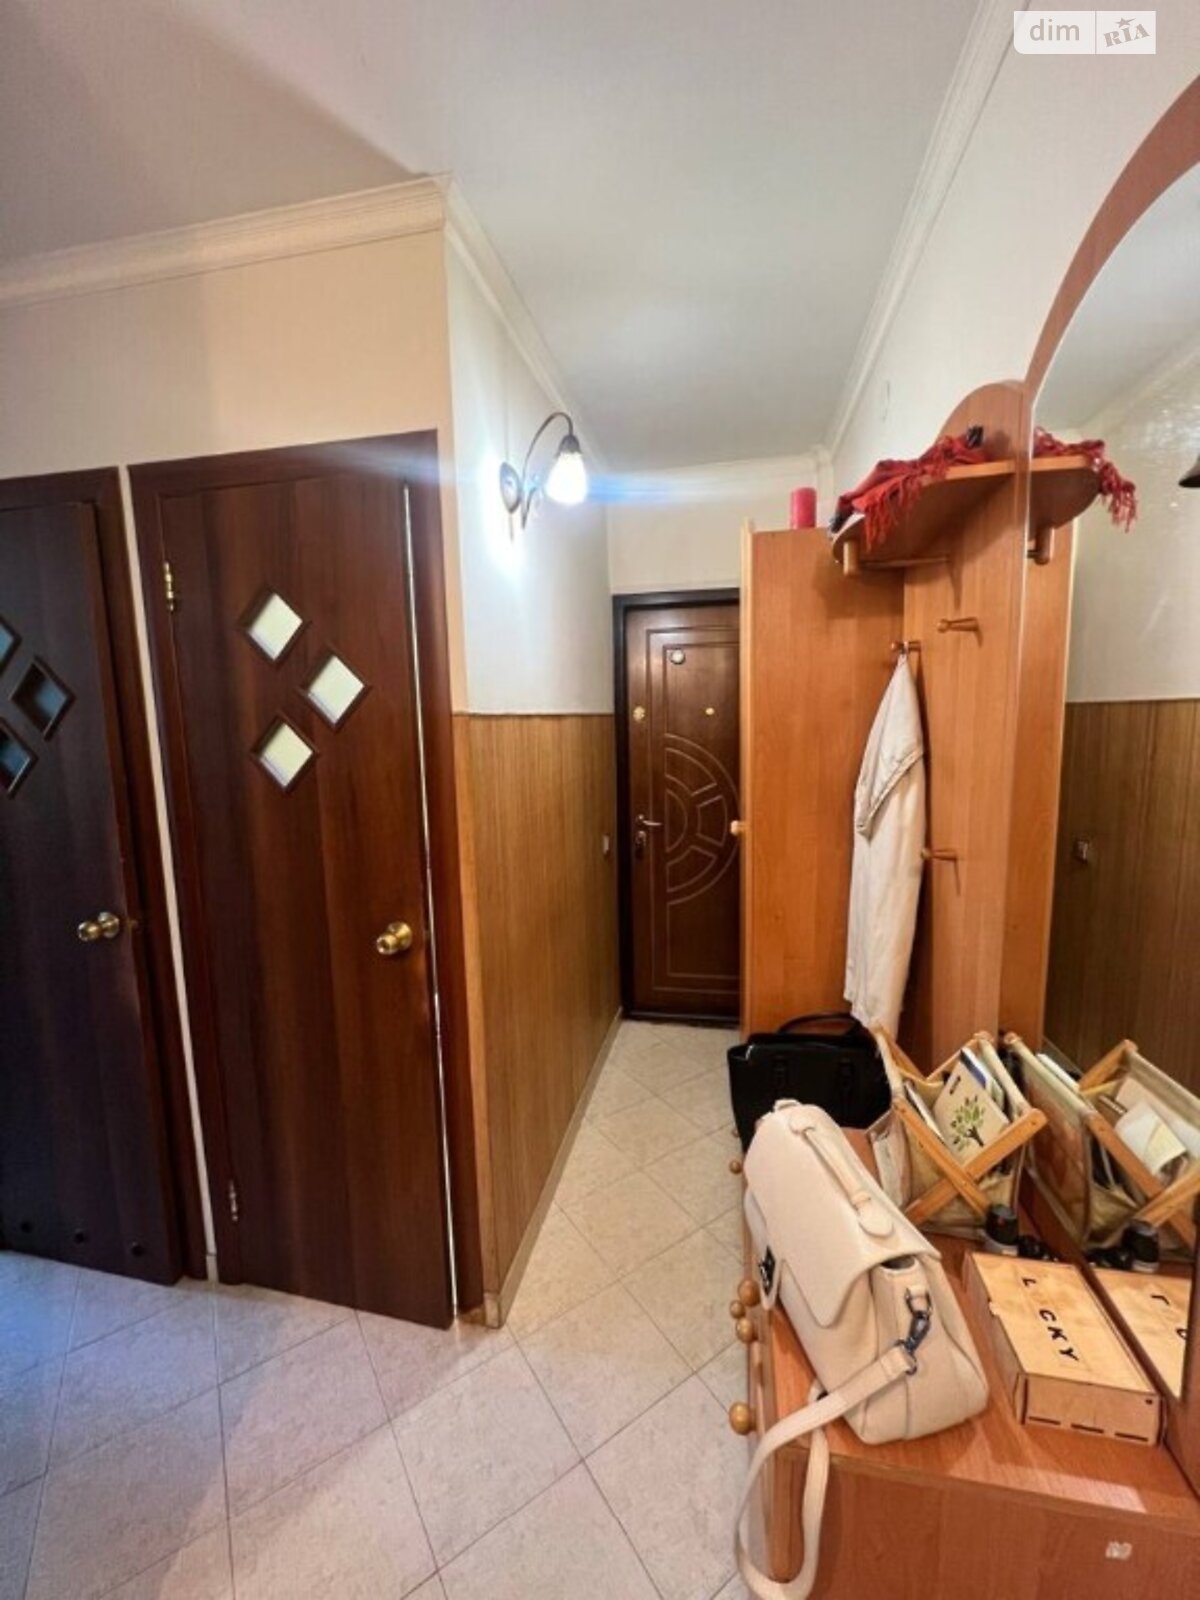 Продажа трехкомнатной квартиры в Львове, на ул. Юрия Руфа 57, район Лычаковский фото 1